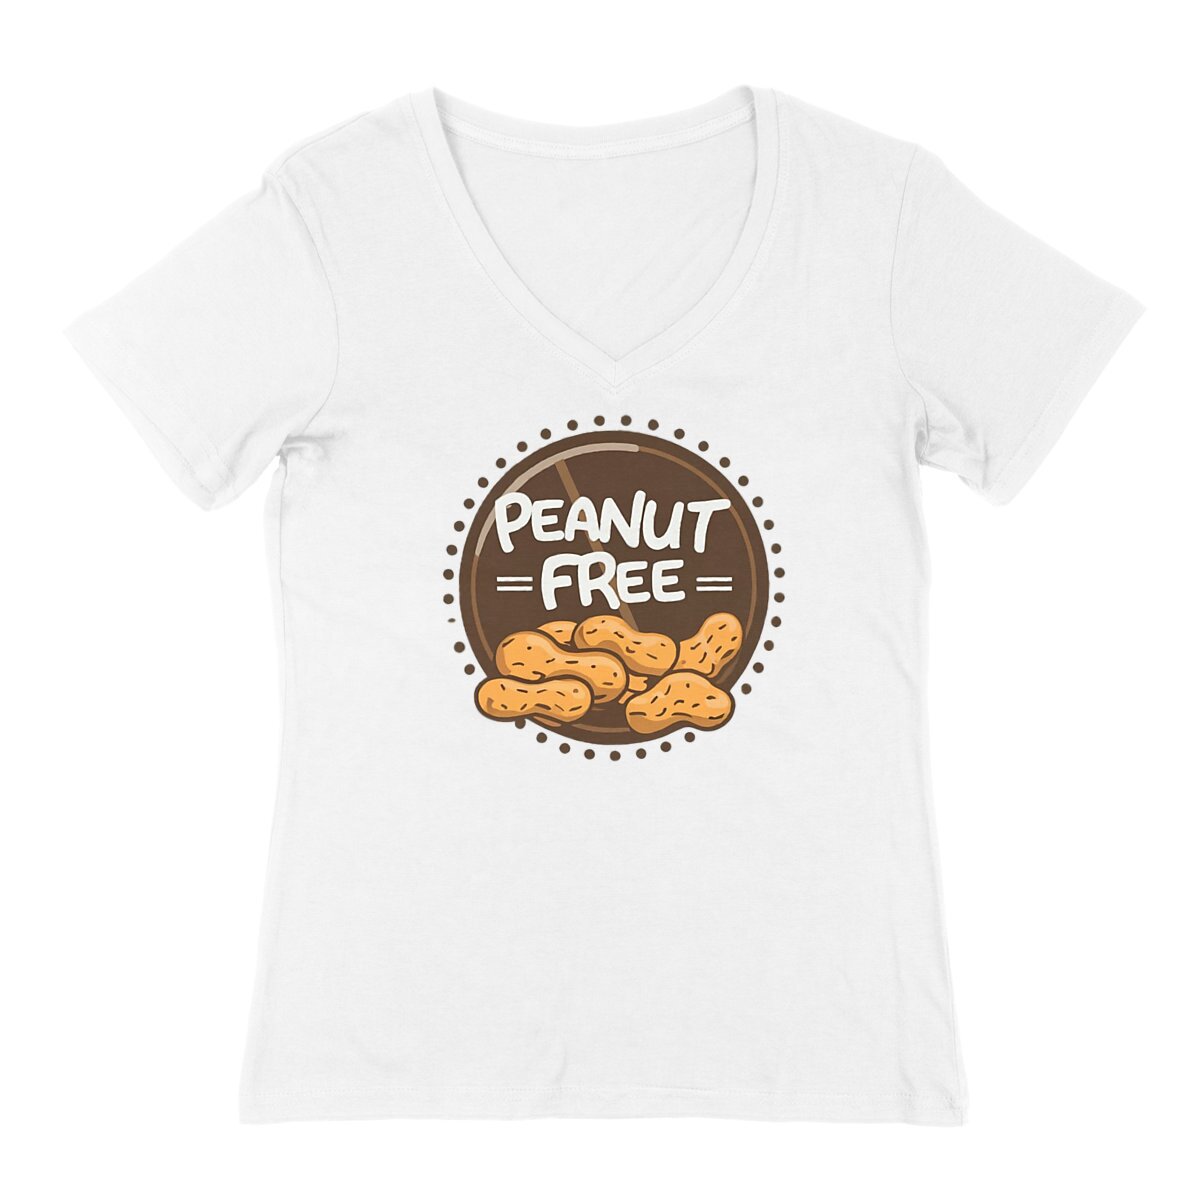 Peanut Free V-Neck Organic Cotton Graphic Shirt | Hypoallergenic - Allergy Friendly - Naturally Free